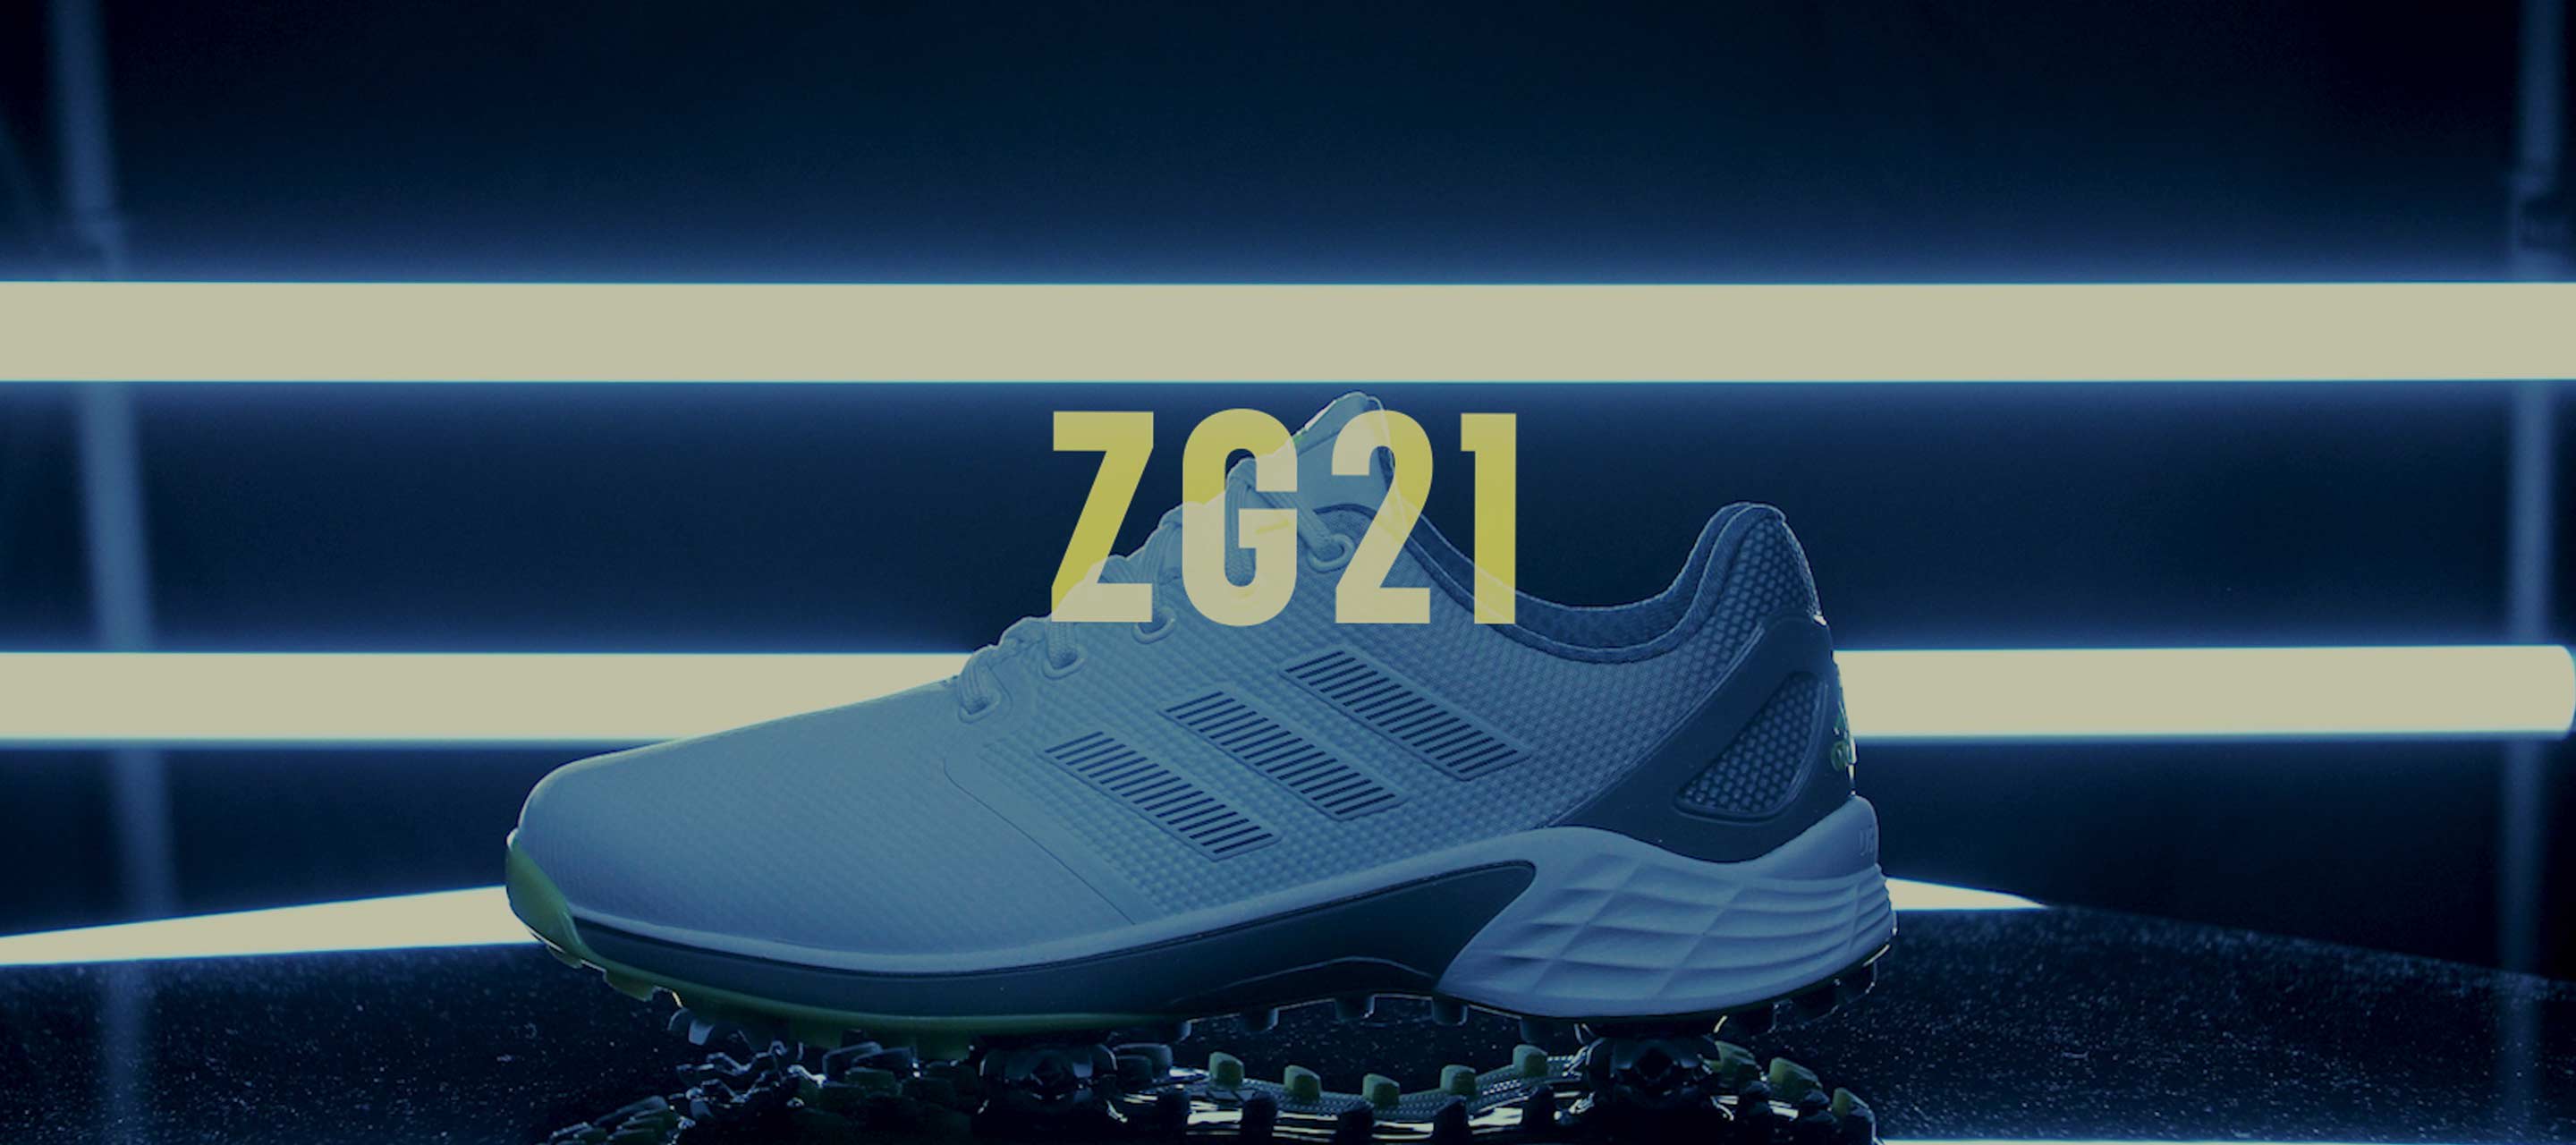 adidas ZG21 Golf Shoes - White | adidas Canada